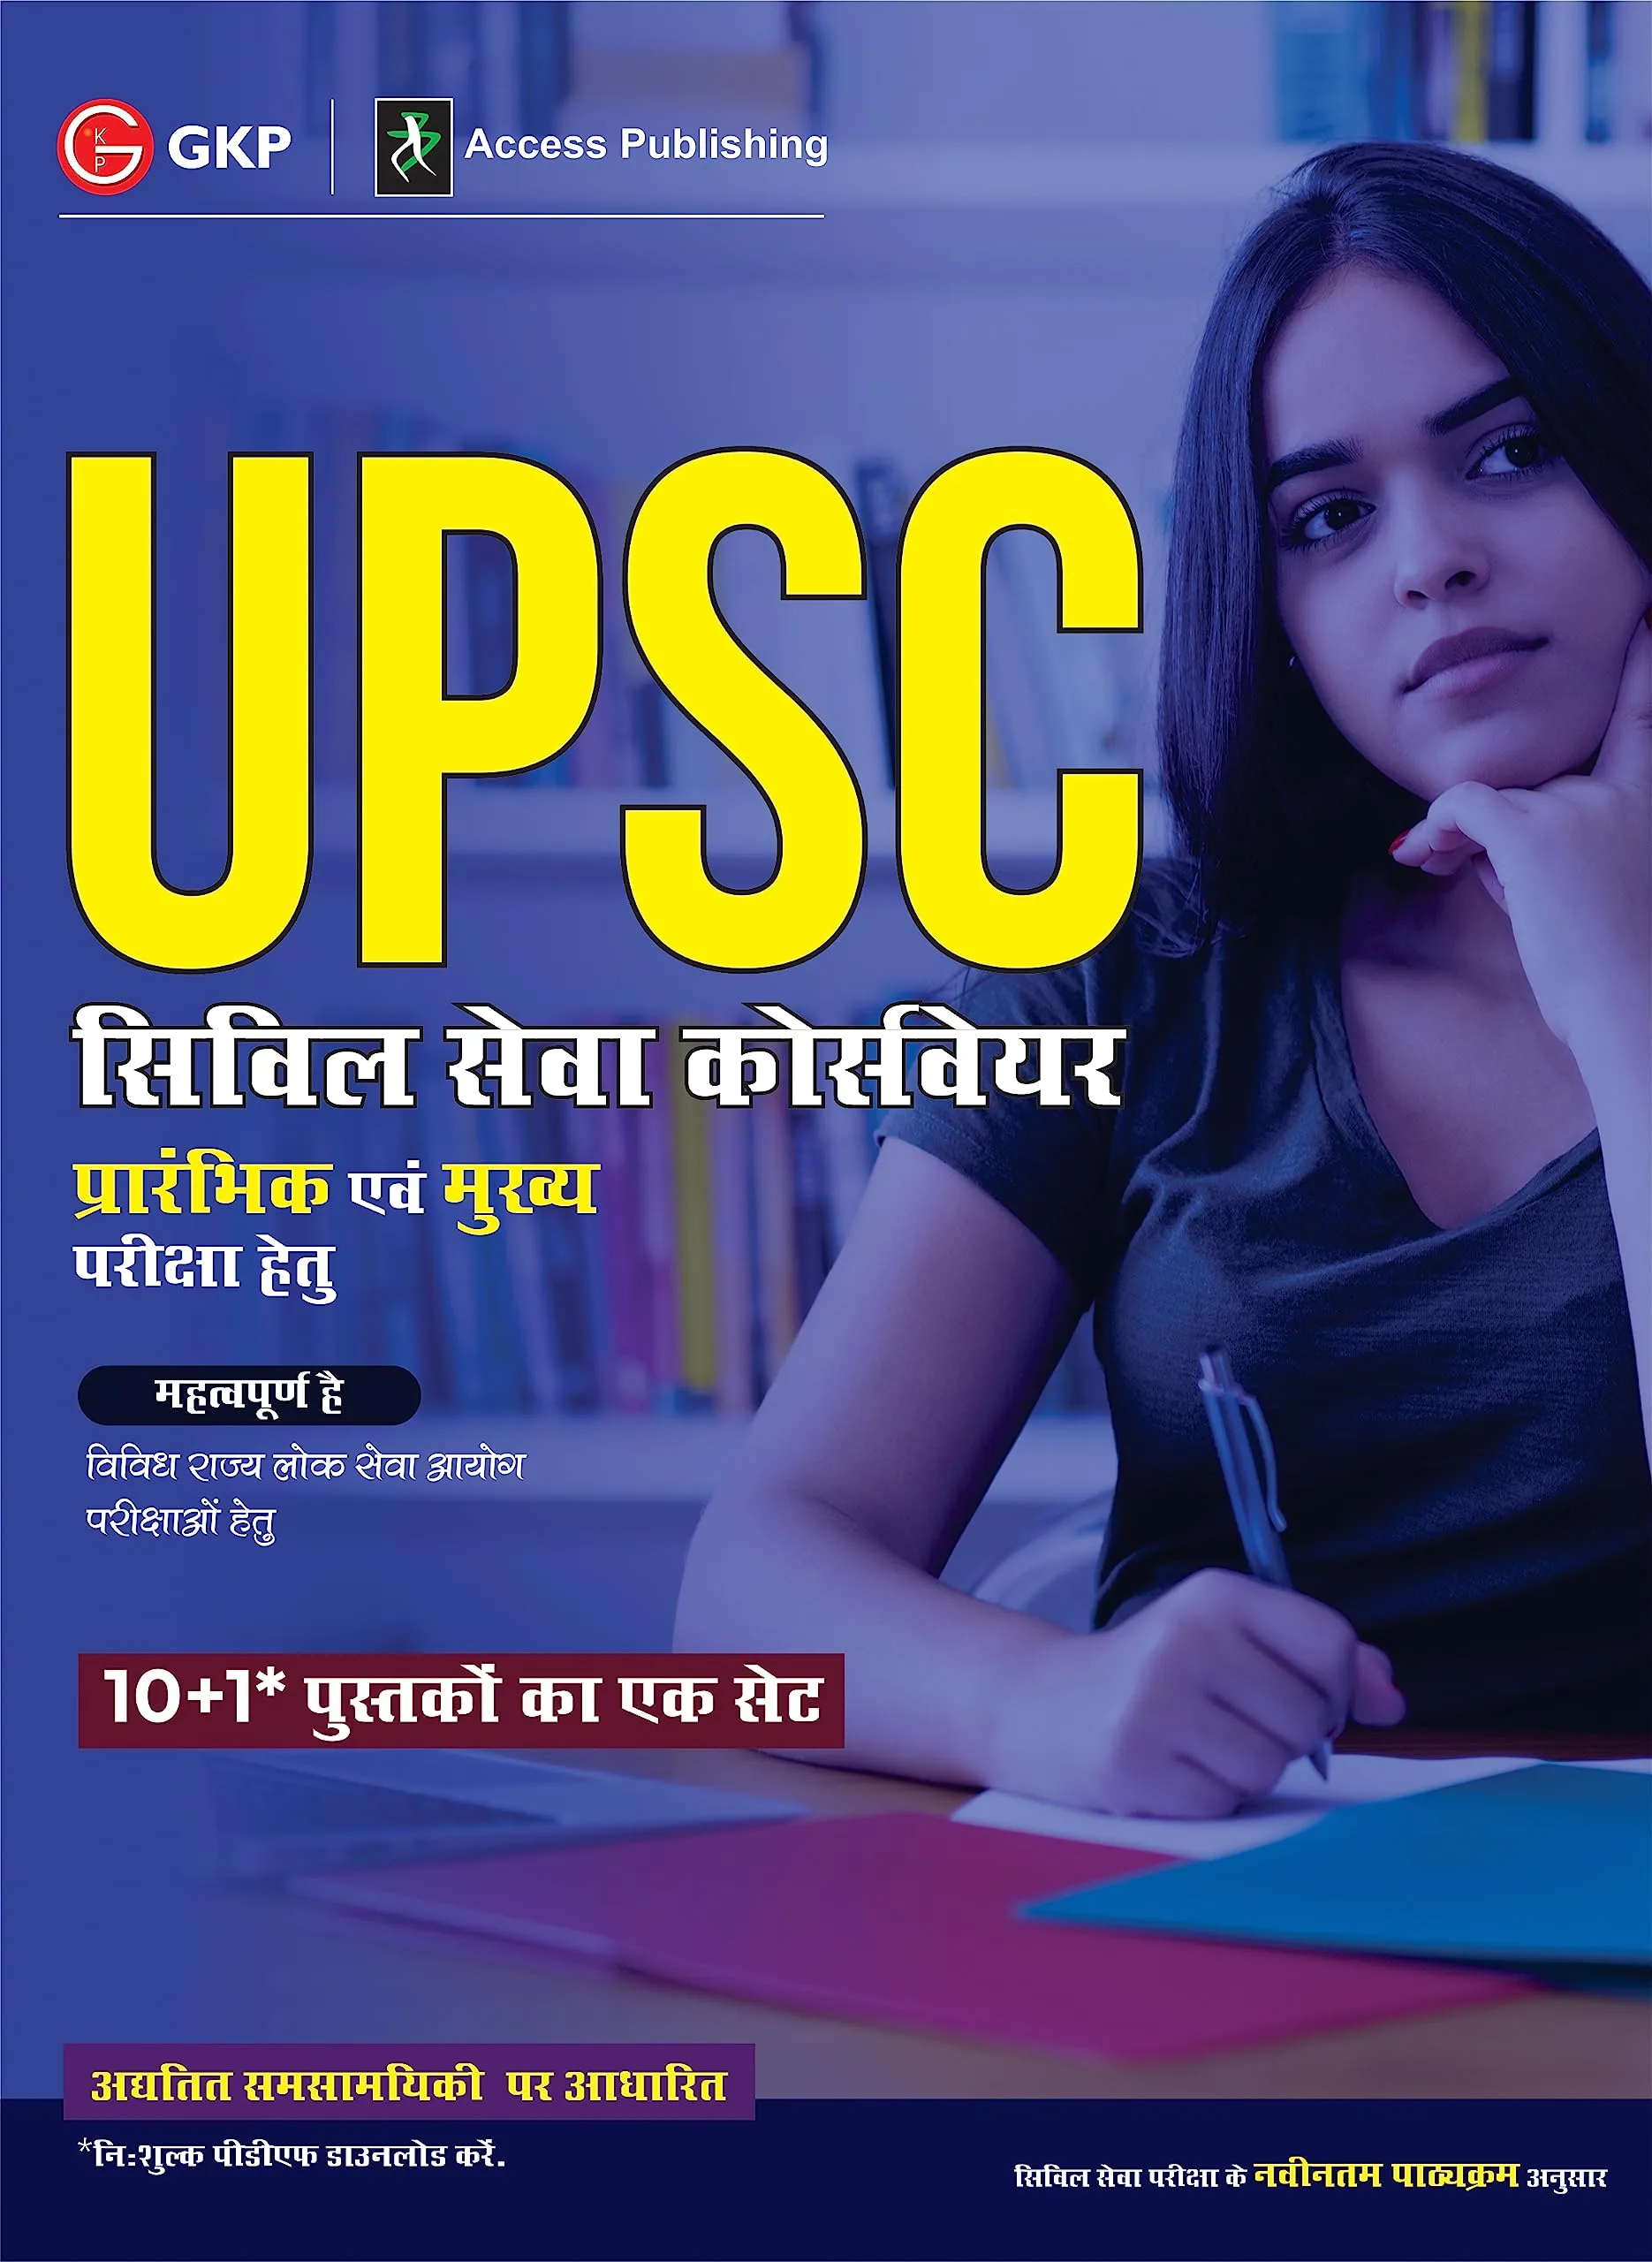 GKP UPSC Civil Services Courseware (Hindi) for Preliminary & Main Examinations (11 Books)